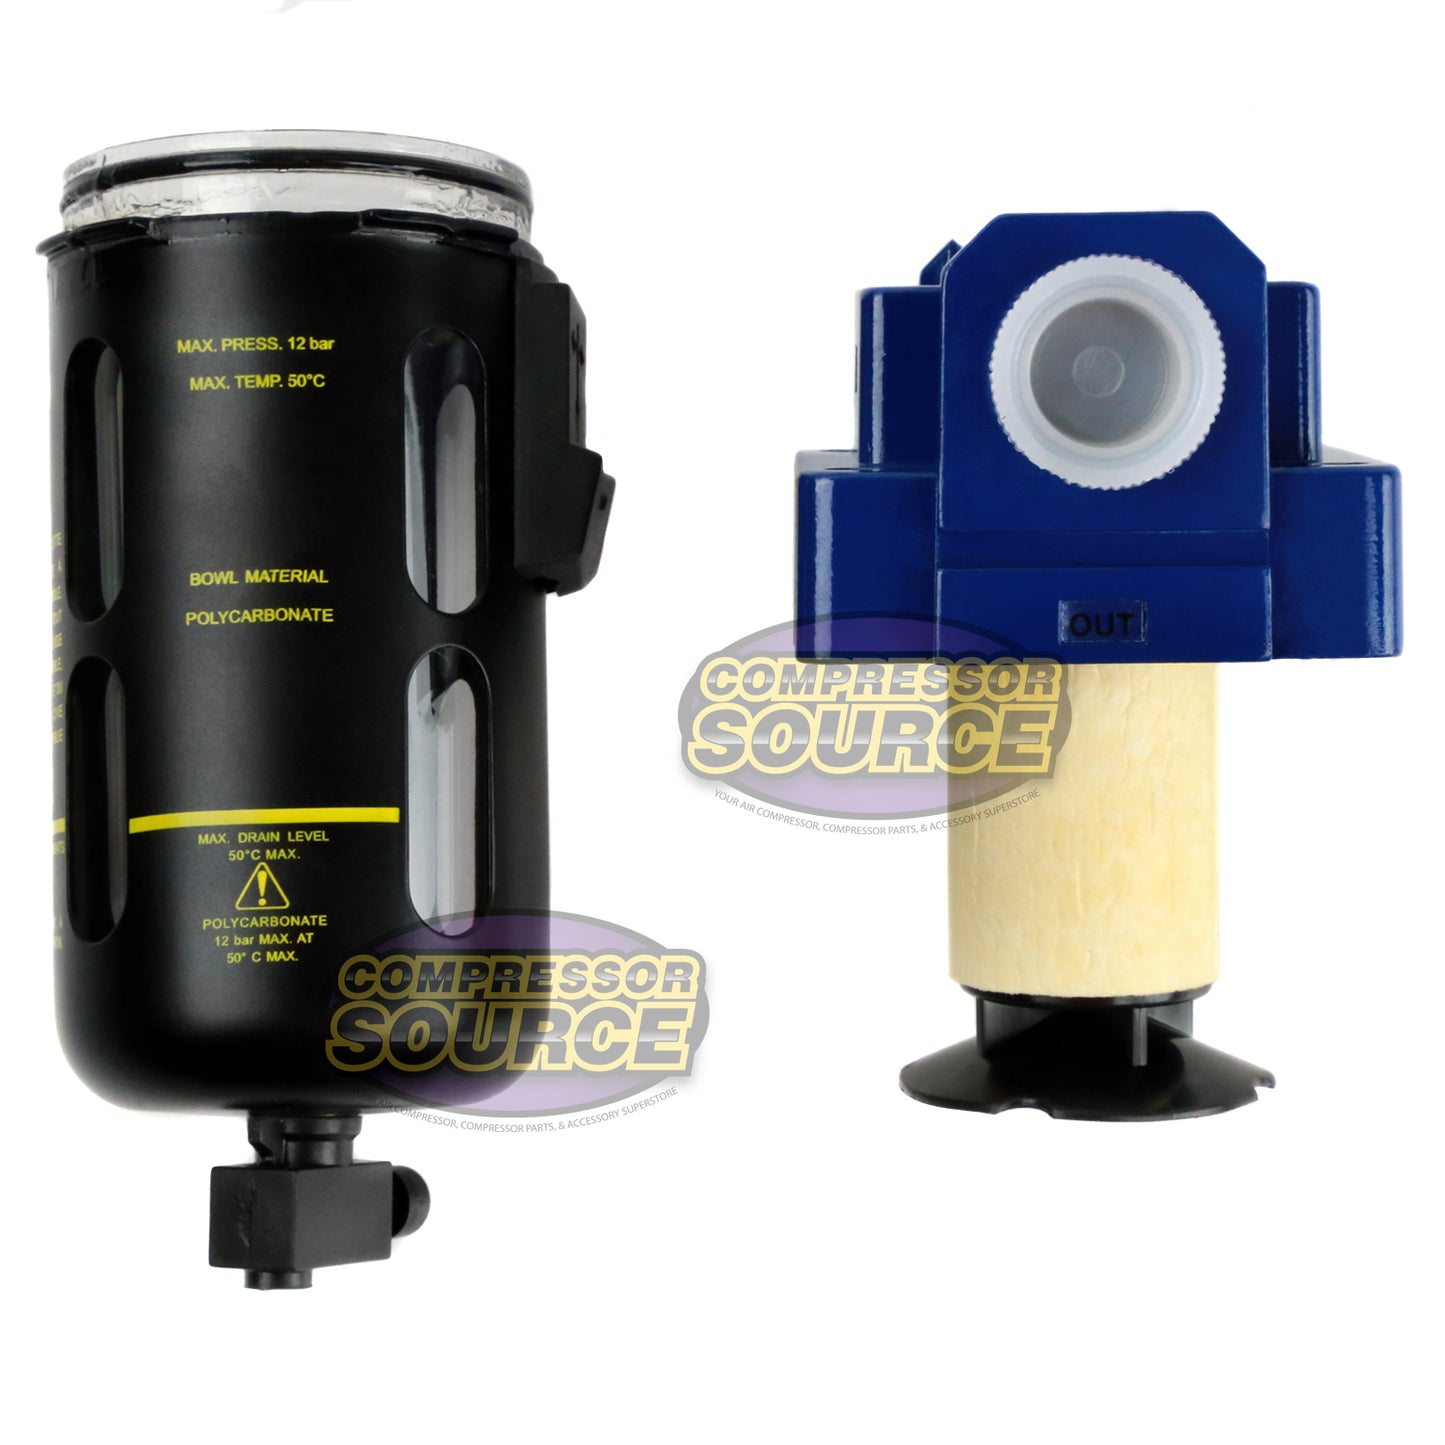 Prevost Compressed Air Inline Oilesser Oil Coalescing Separator Filter 1/2" FNPT